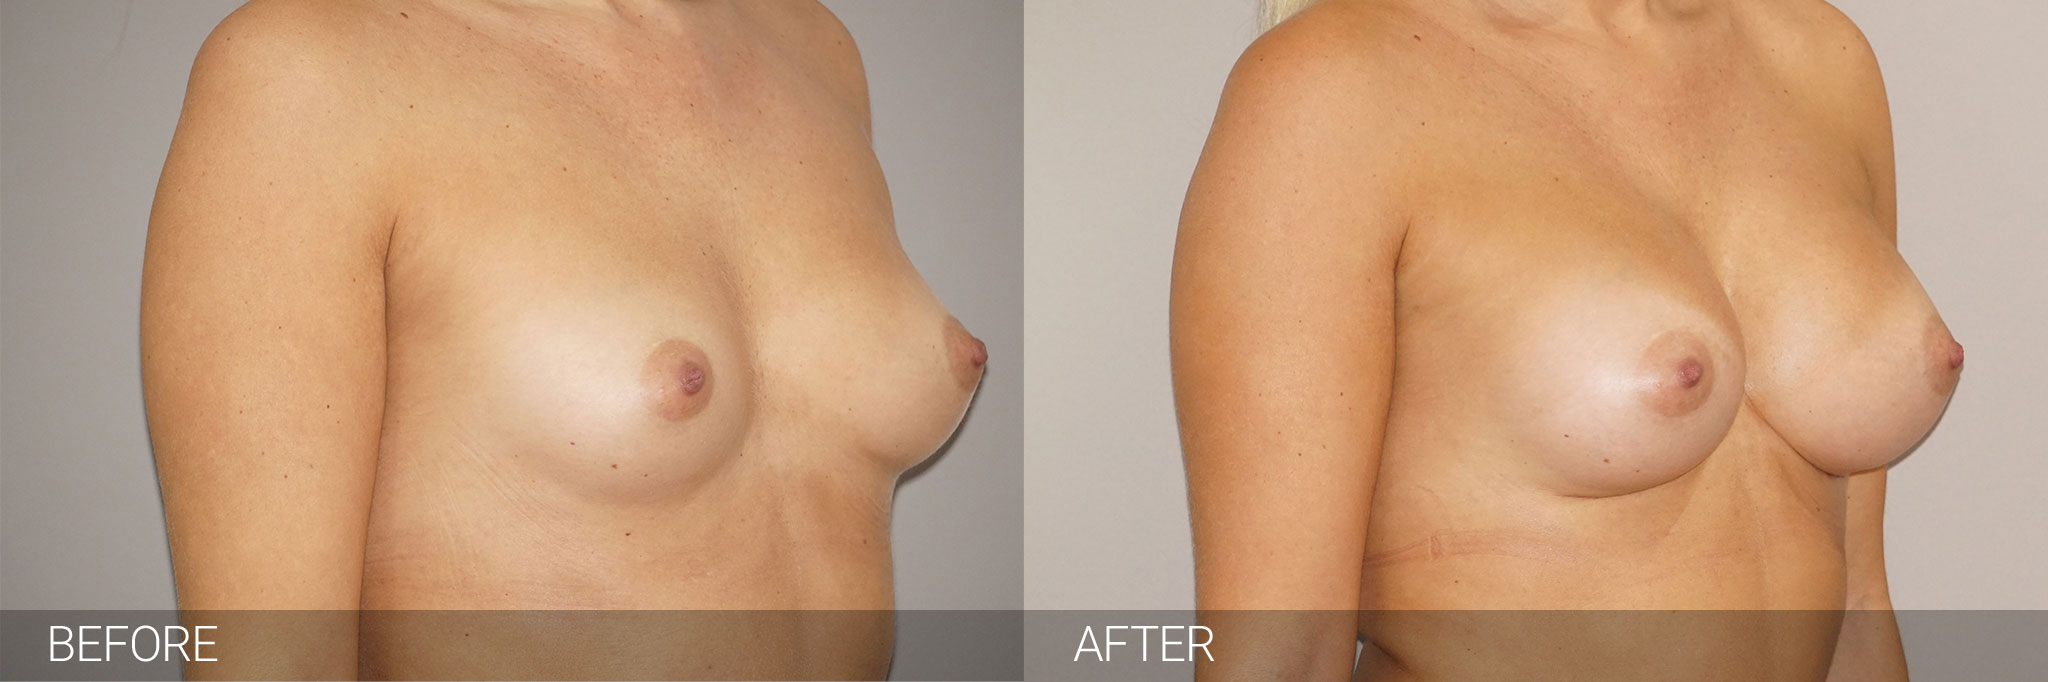 Unhappy in a bikini - Breast implants or breast uplift